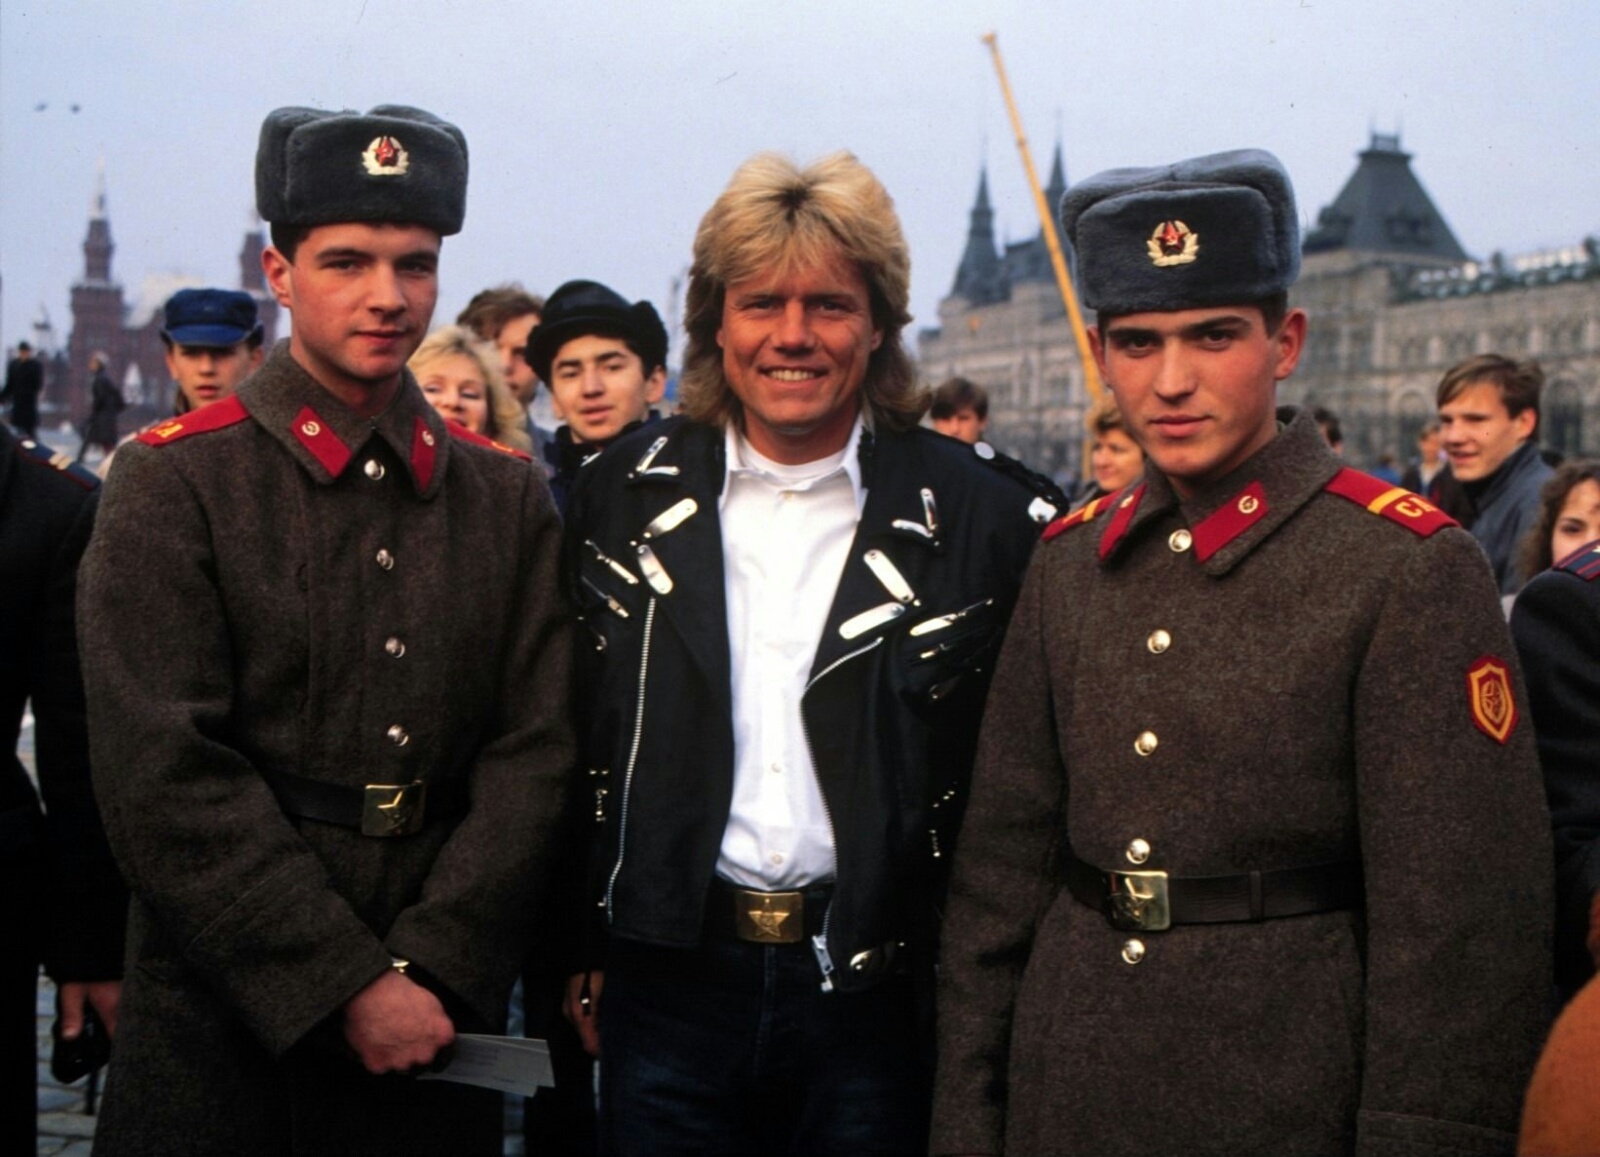 1600x1157, 404 Kb / Дитер Болен, солдаты, Москва, 1989